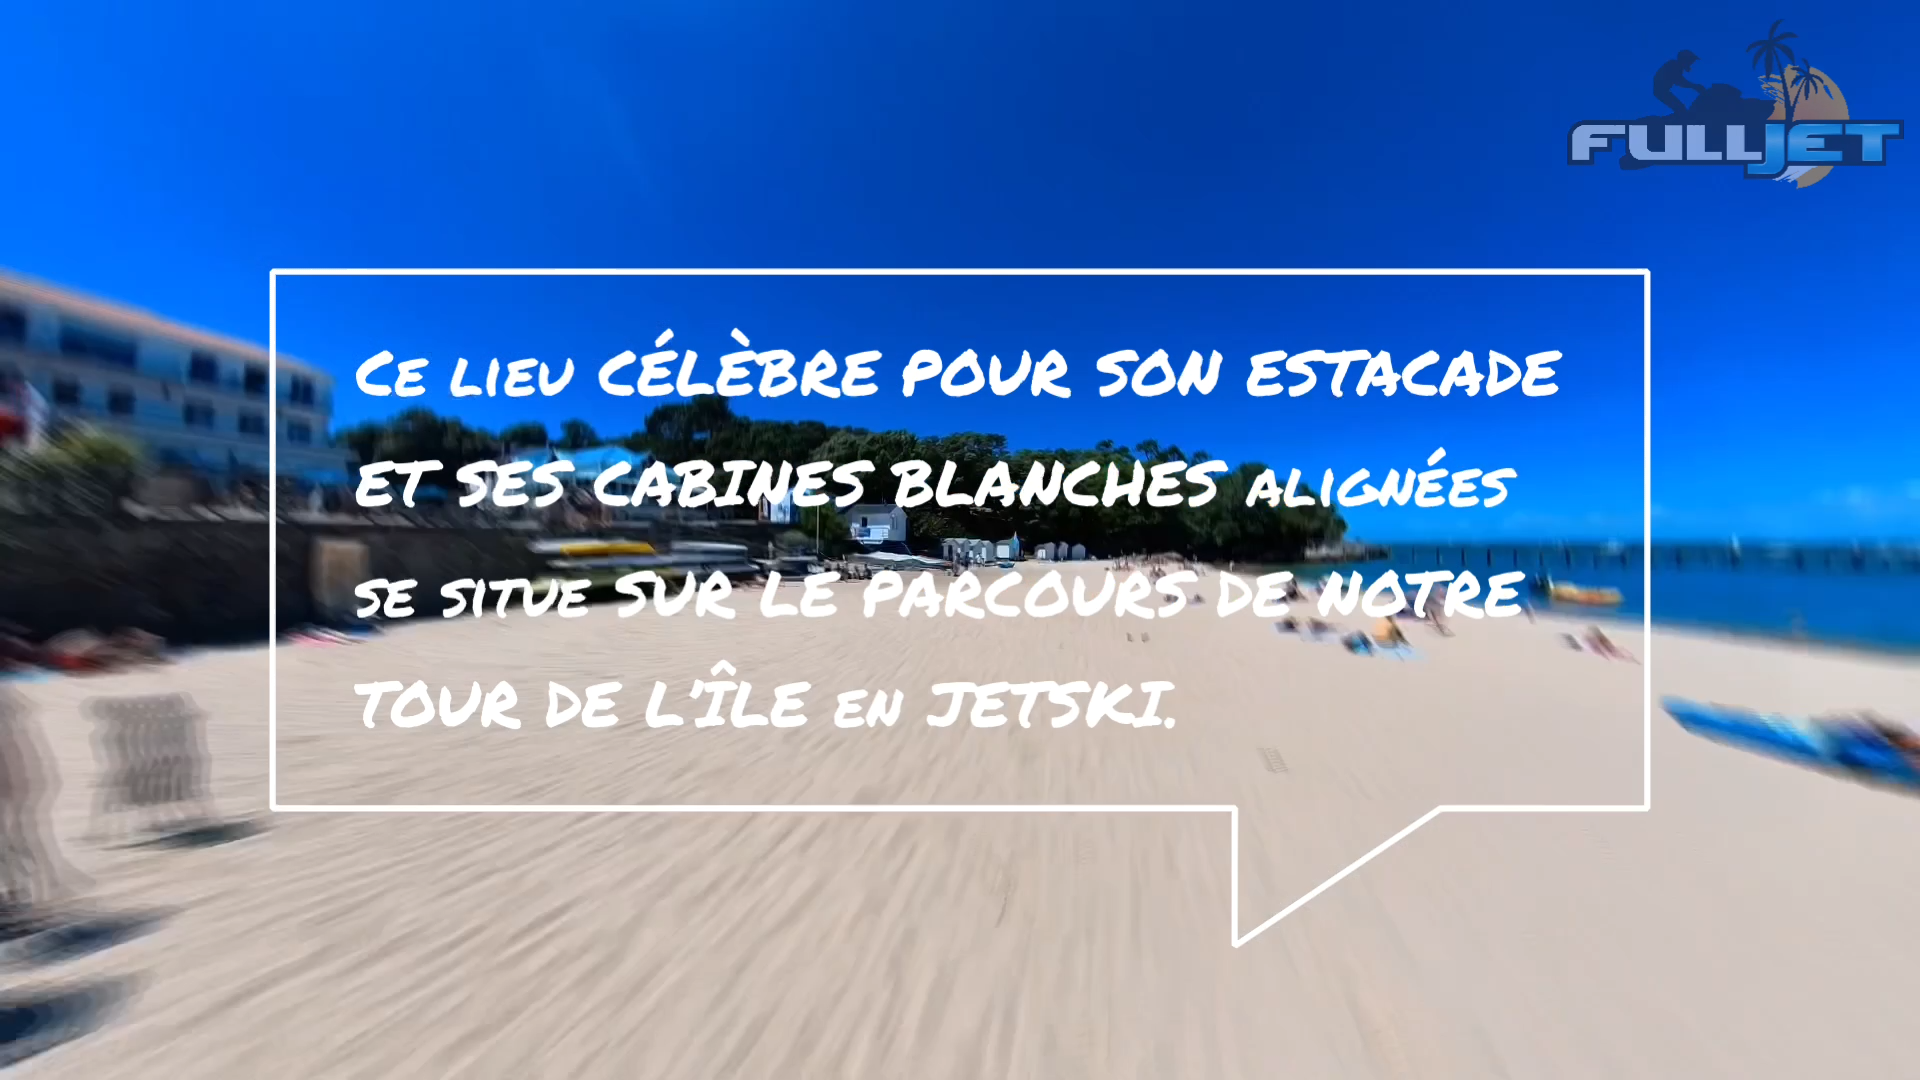 Discover La Plage des Dames by Jetski